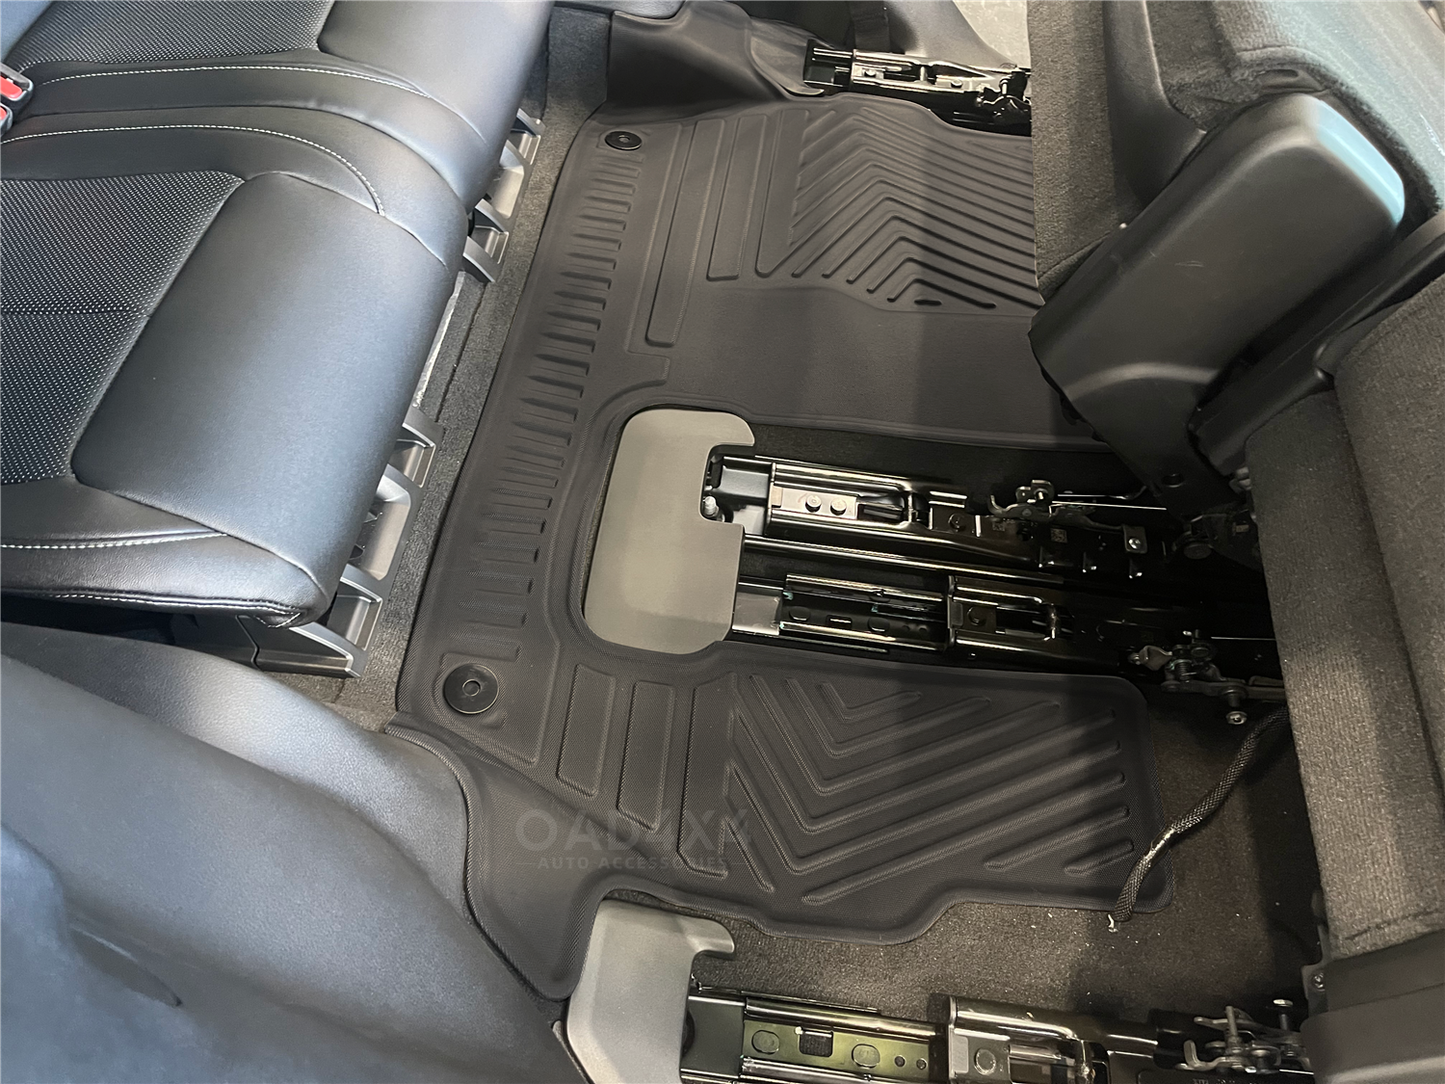 5D TPE Floor Mats 3rd / Third Row for Jeep Grand Cherokee L WL 7 Seats 2021-Onwards High Coverage Floor Mat Liner Car Mats